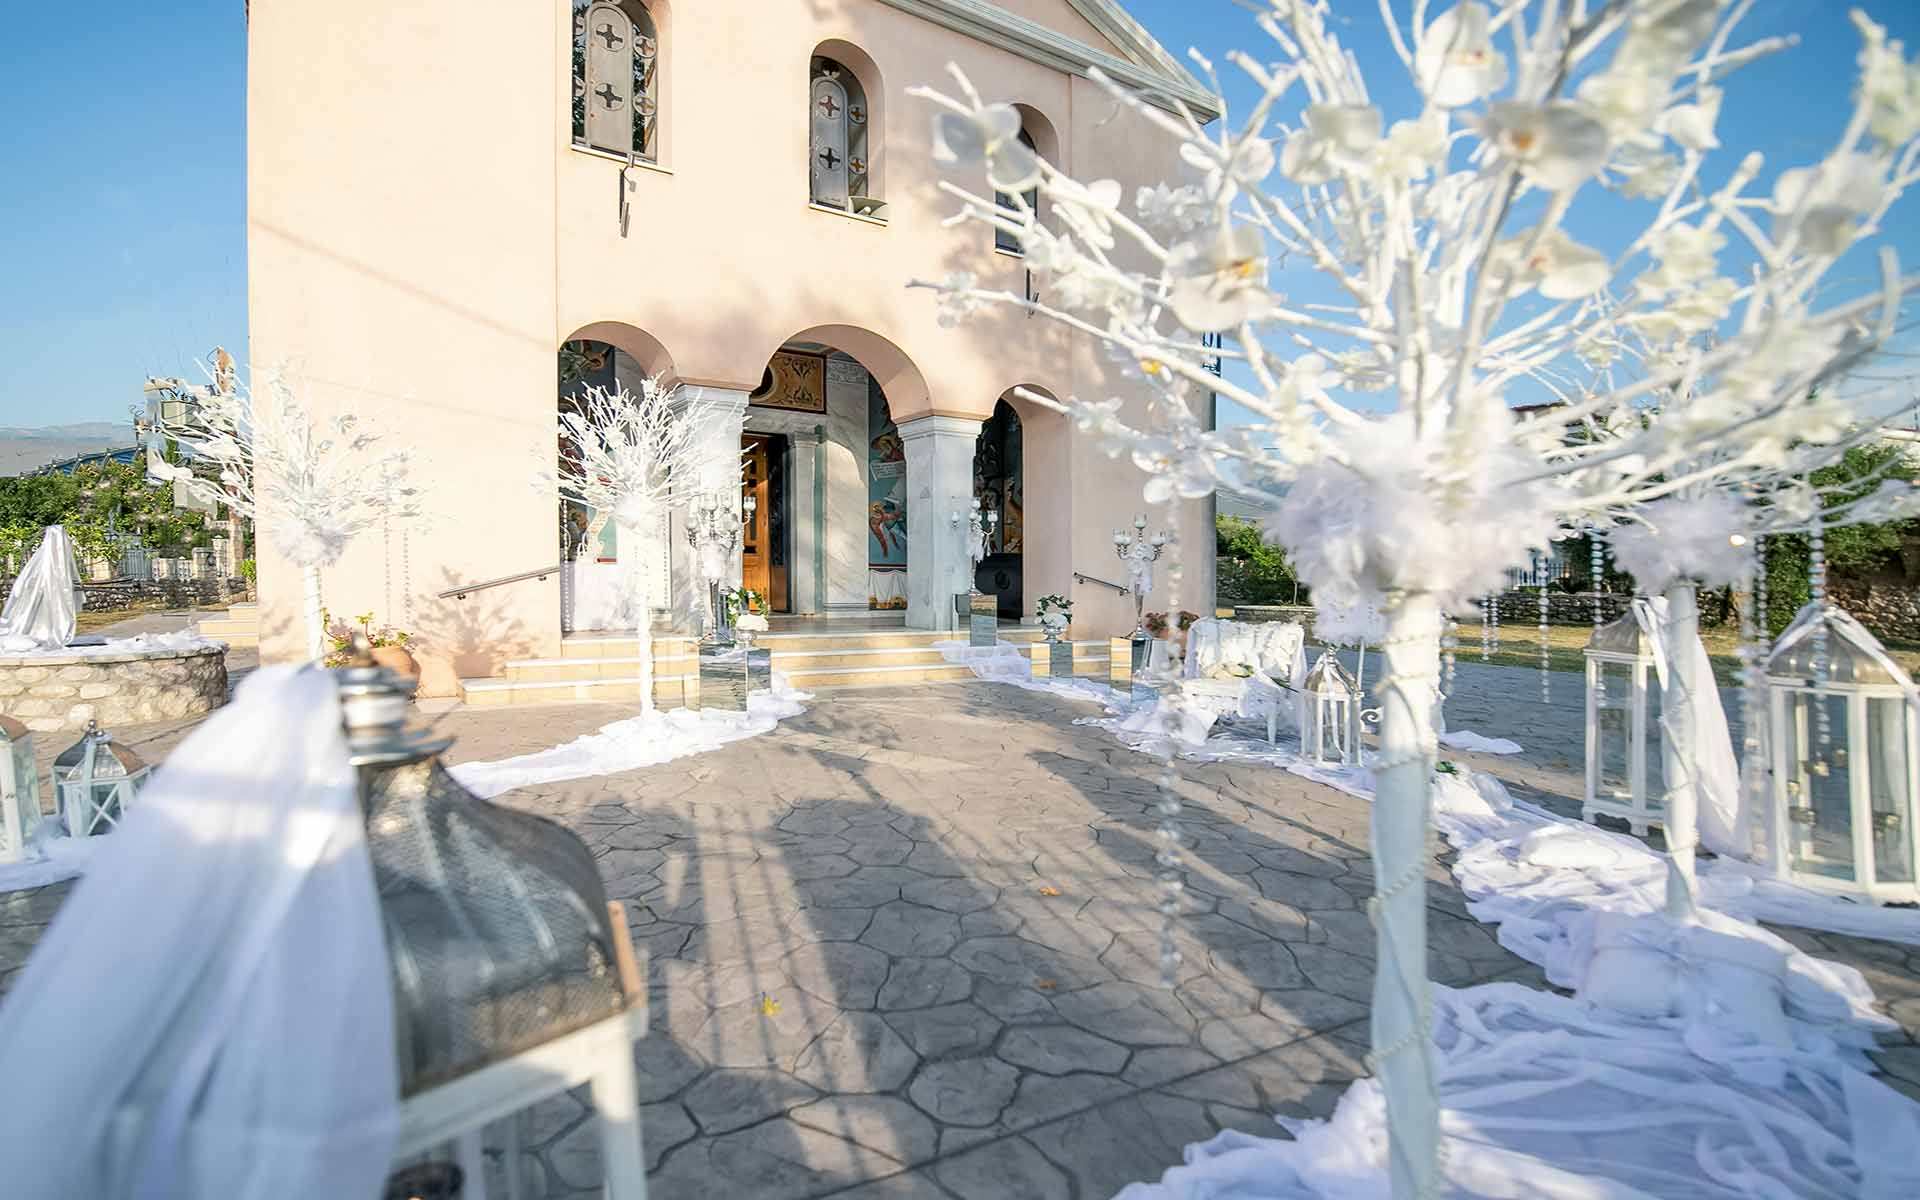 Wedding-Ceremony-Under-White-Trees-Decor-Ideas-by-Diamond-Events